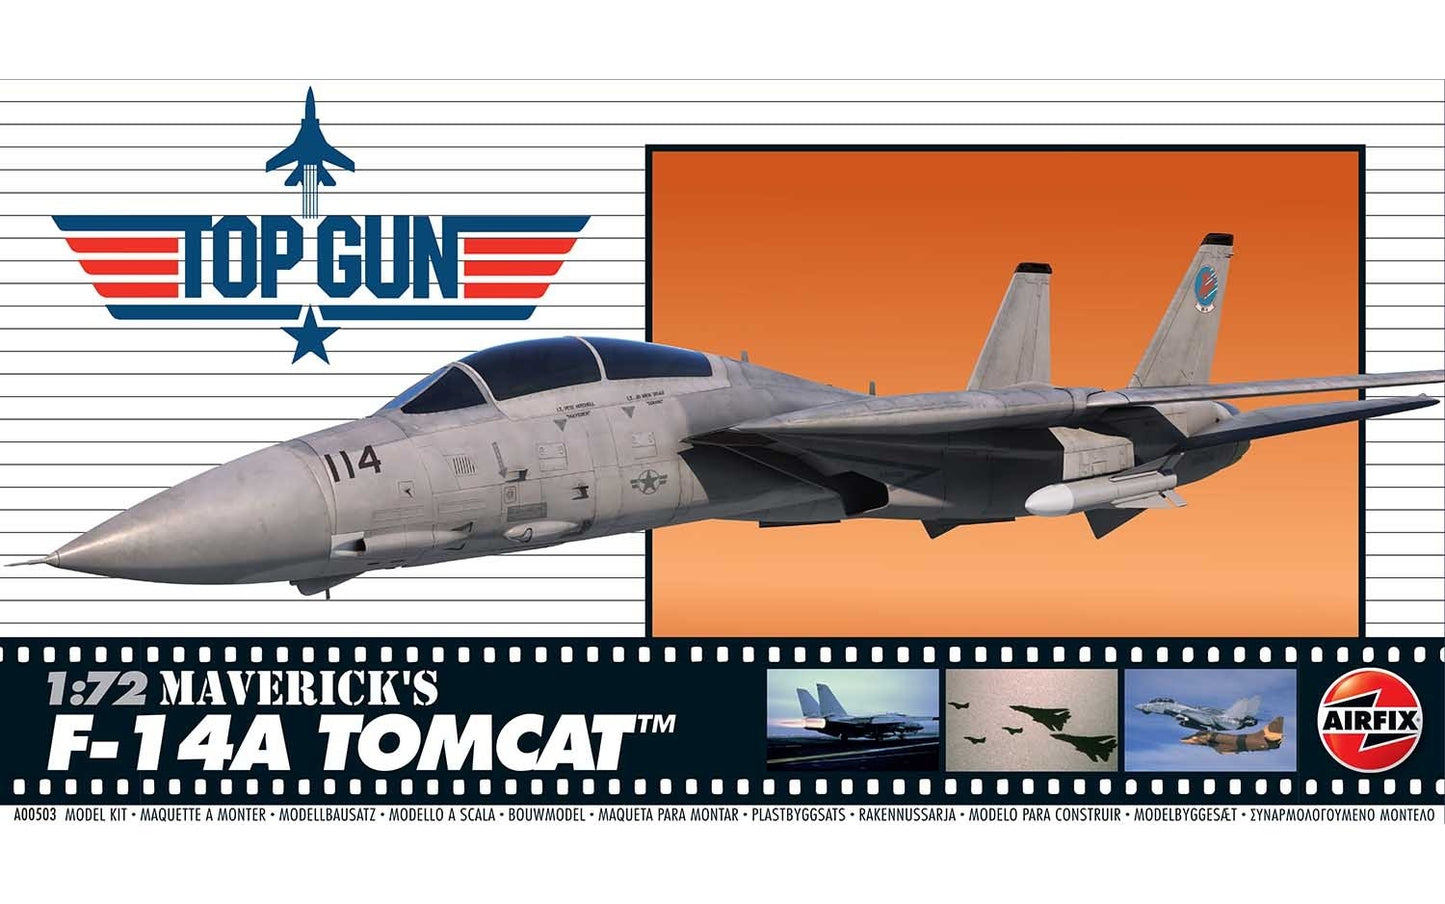 Top Gun Maverick's F-14A Tomcat 1:72 Military Aviation Plastic Model Kit